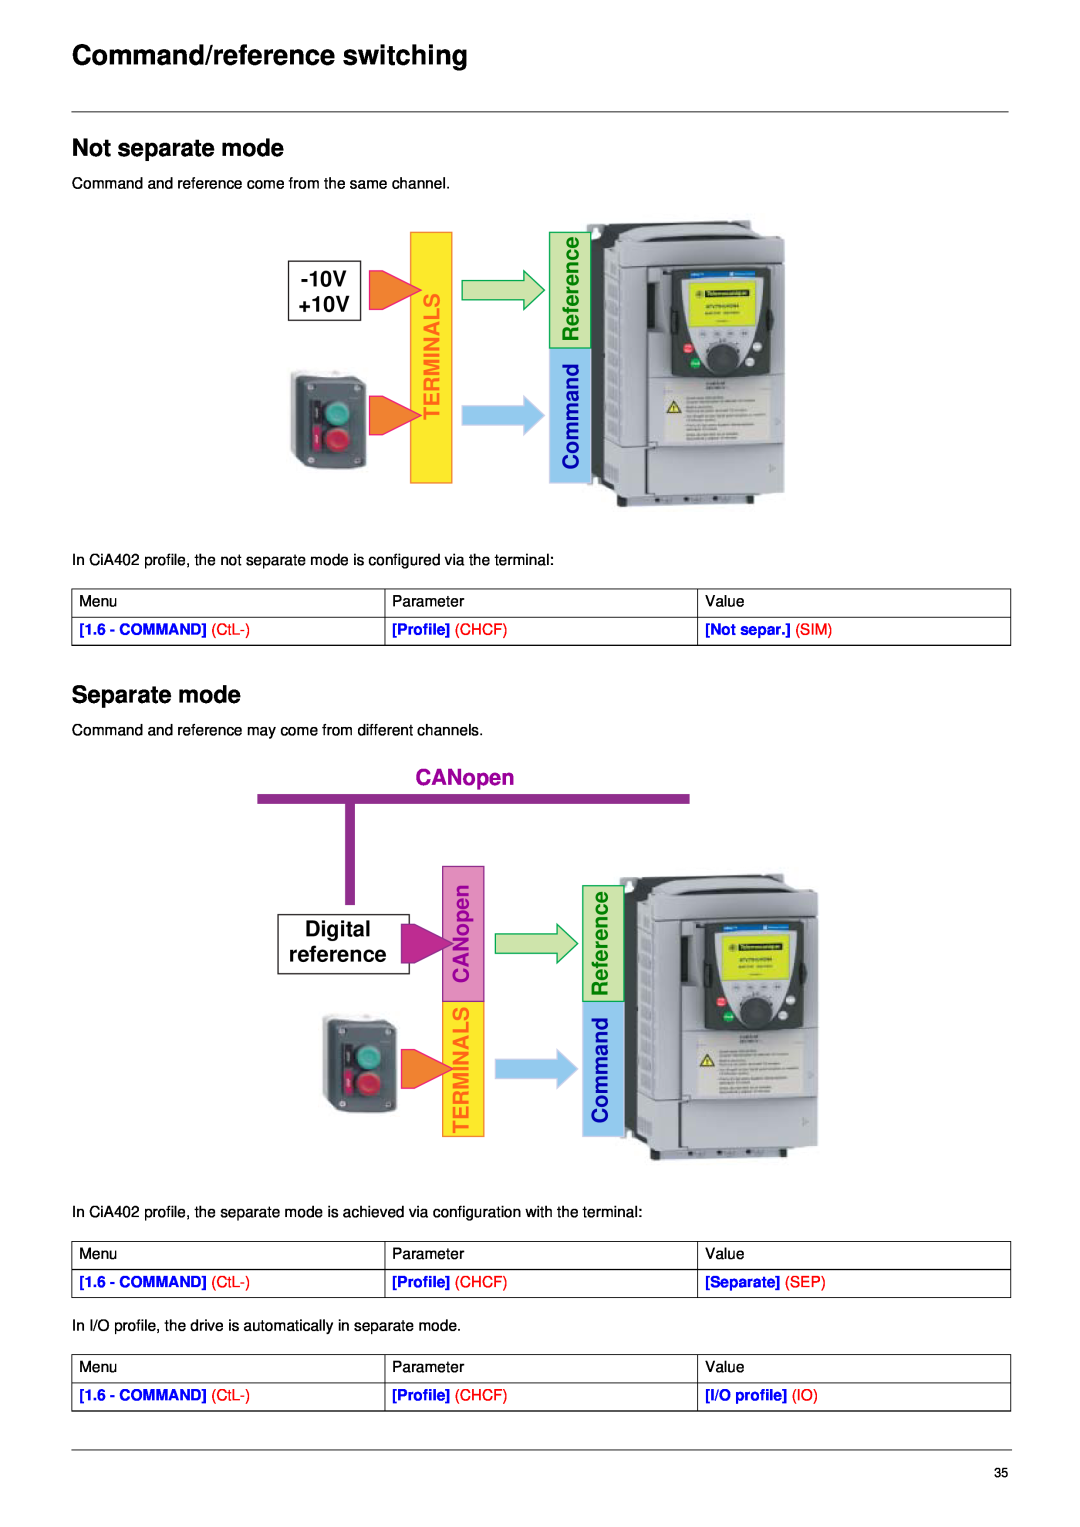 Schneider Electric 61 user manual Not separate mode, Separate mode, 10V +10V, Terminals, CANopen, Digital reference 